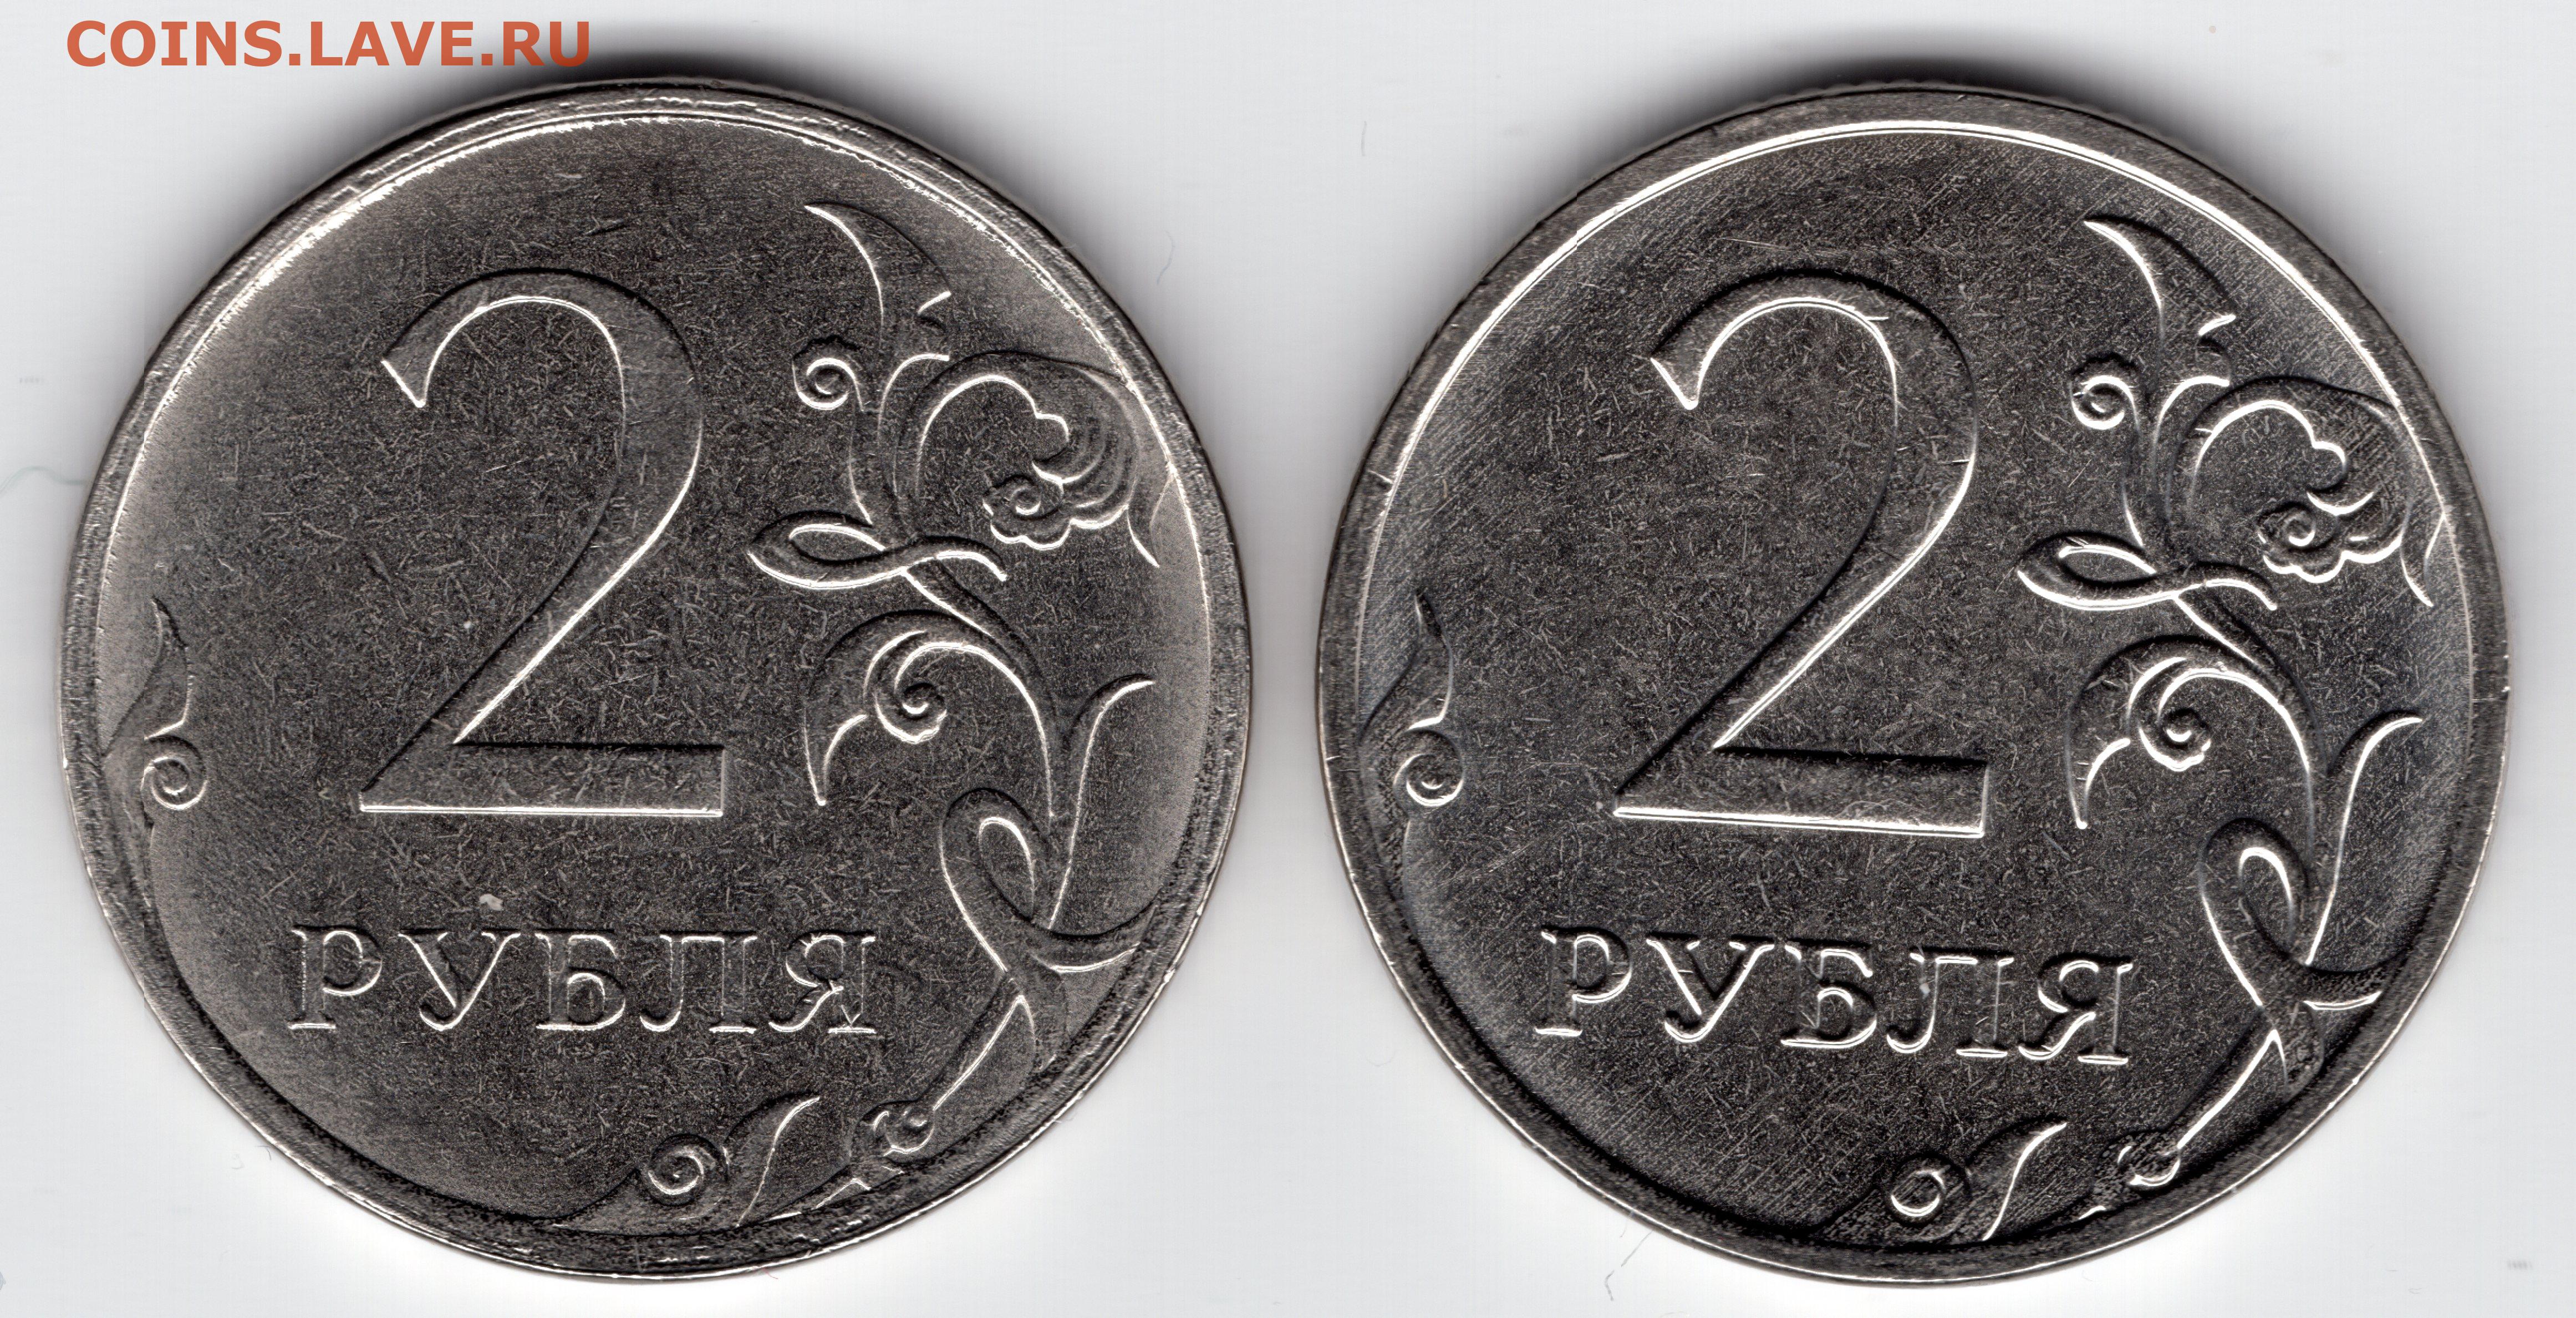 12 рублей в 80 годах. Монета два рубля. Брак монеты 5 рублей 2009г. 1 Рубль шт а шт б. 2 Рубля 2012 с браком.